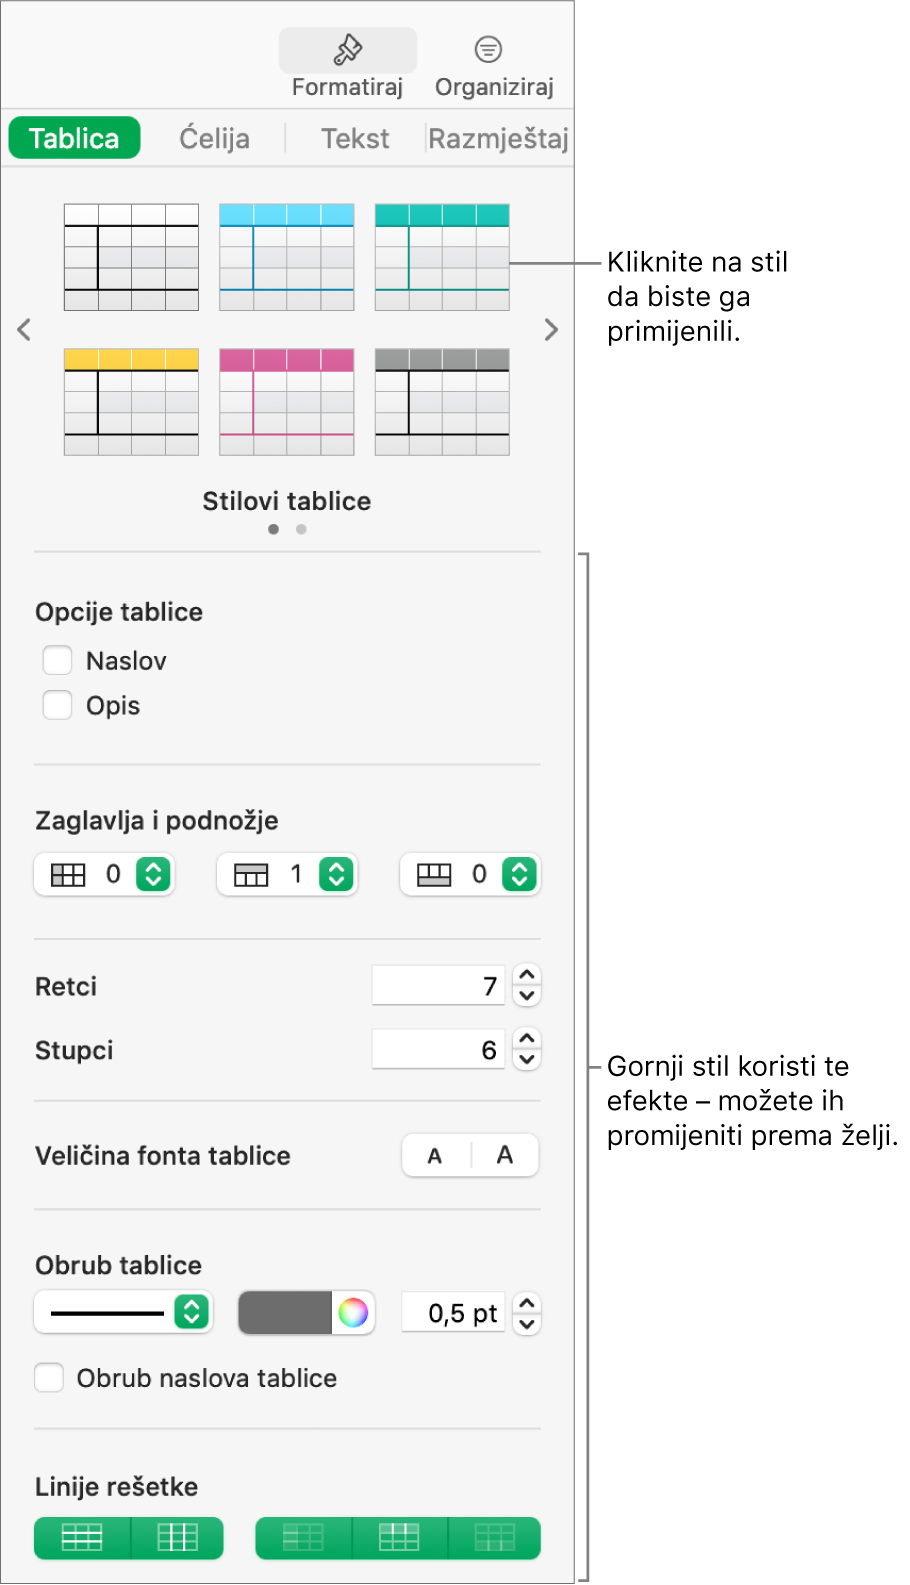 Rubni stupac Formatiraj s prikazom stilova tablica i opcija formatiranja.